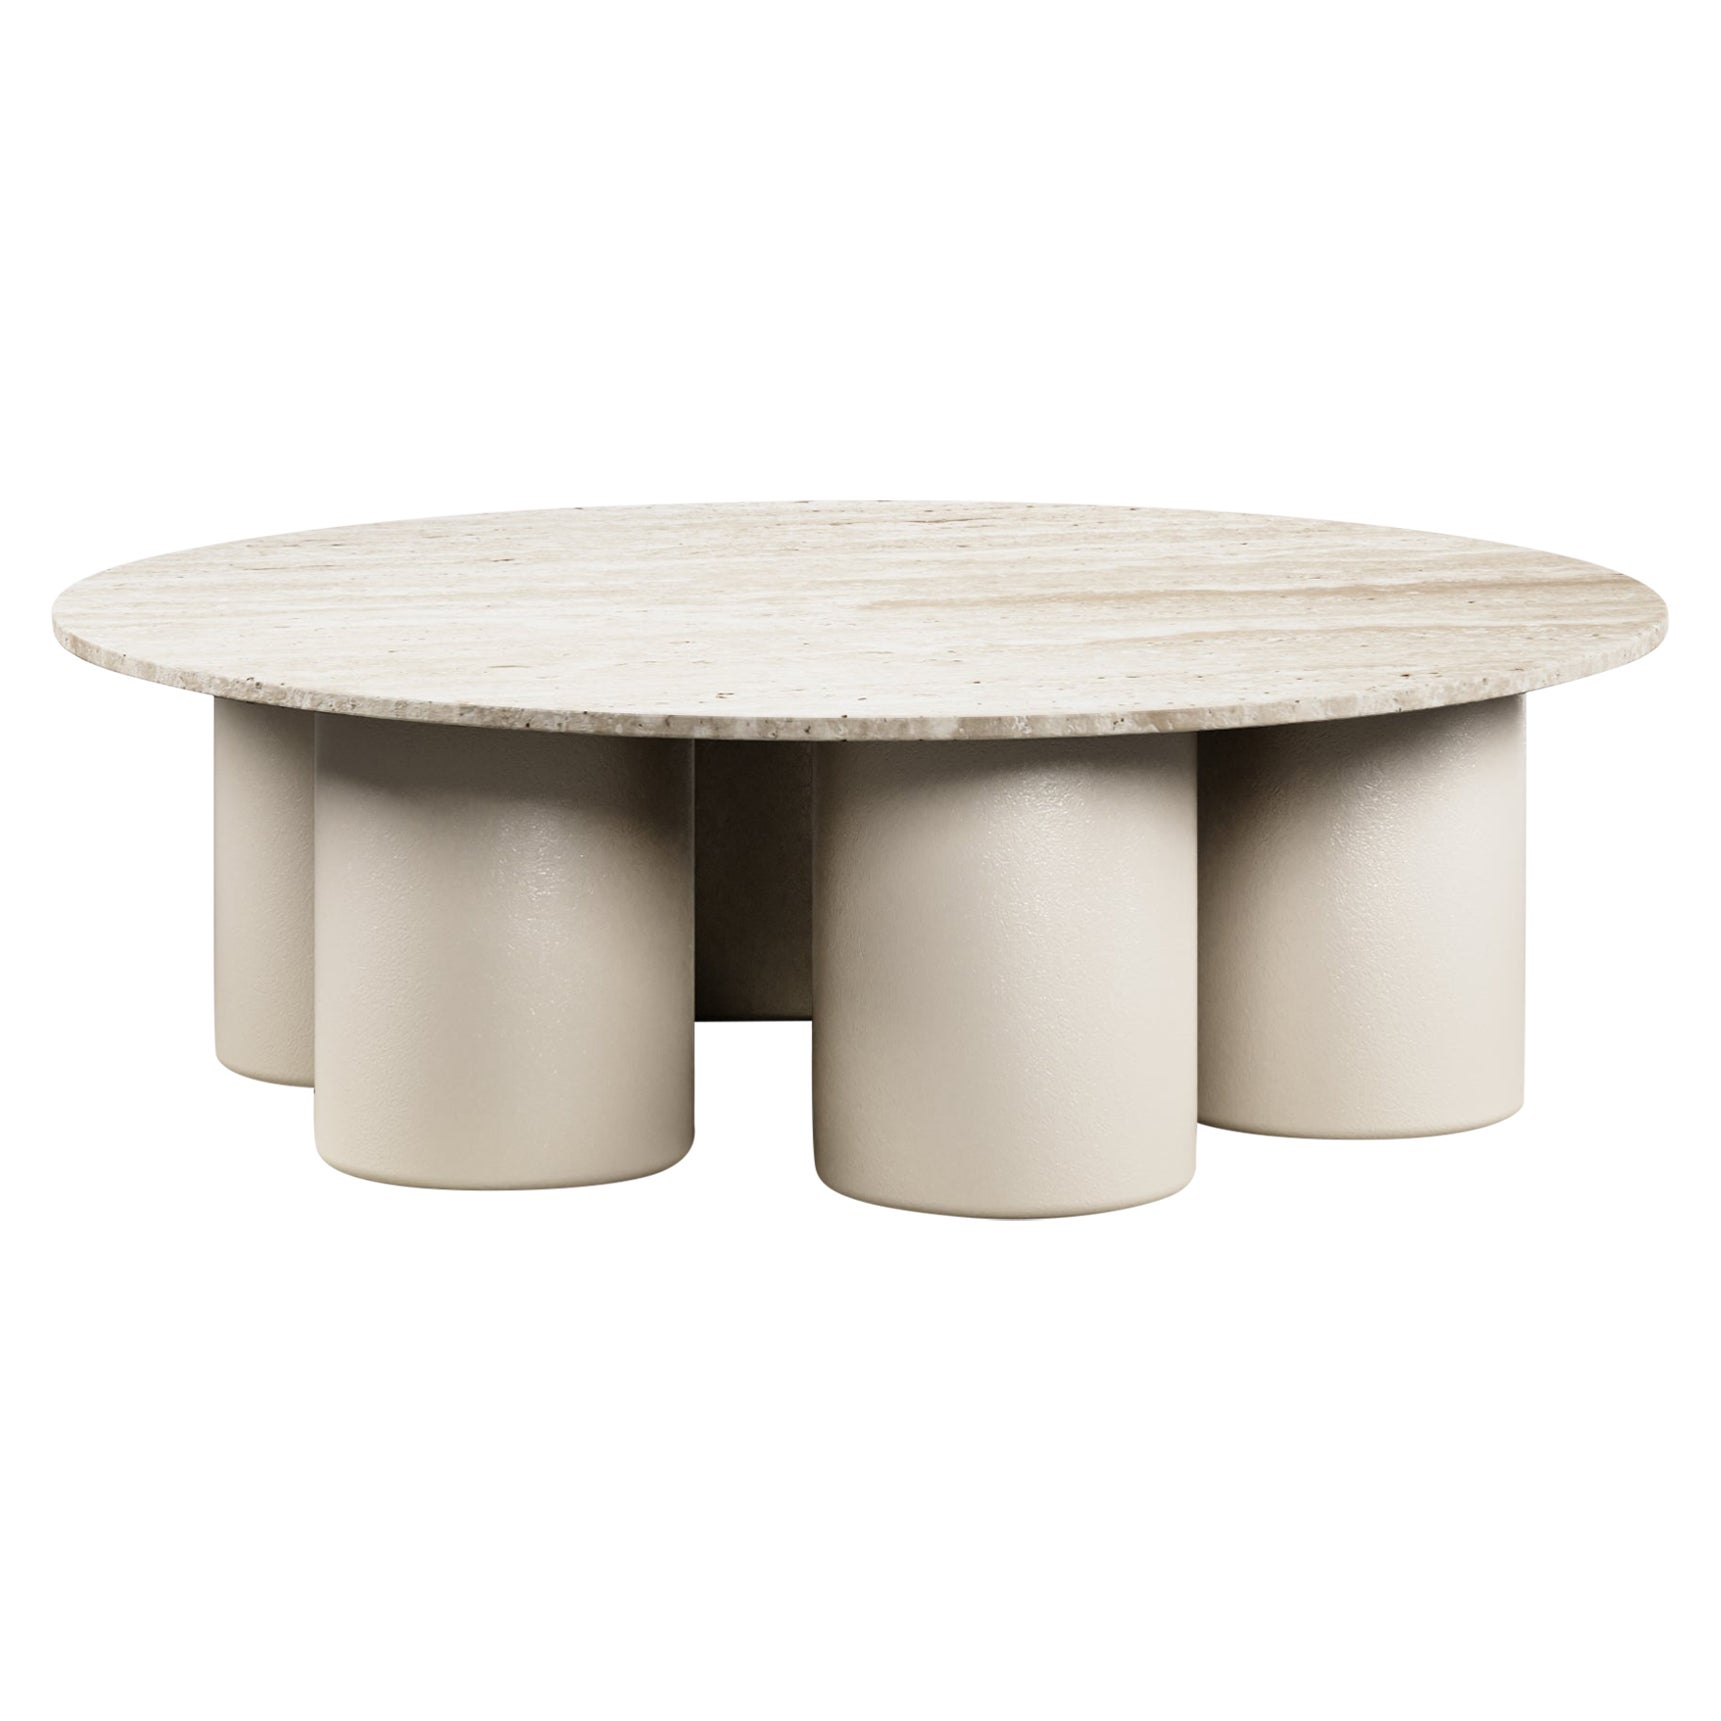 Mira Coffee Table - Beige - Travertine stone